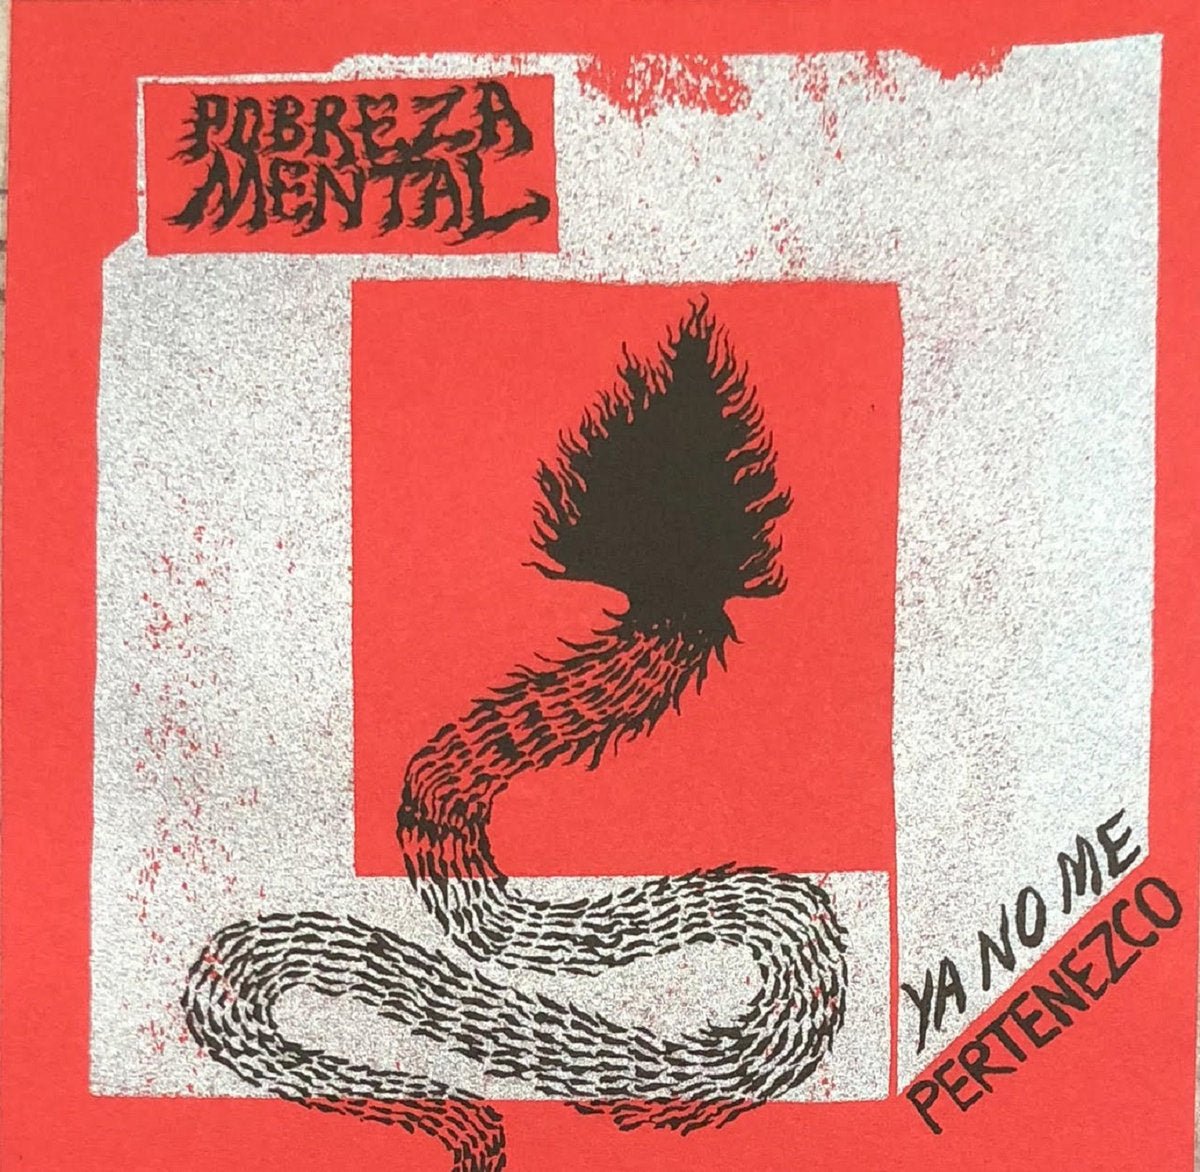 Pobreza Mental - Ya No Me Pertenezco 7" - Vinyl - Toxic State